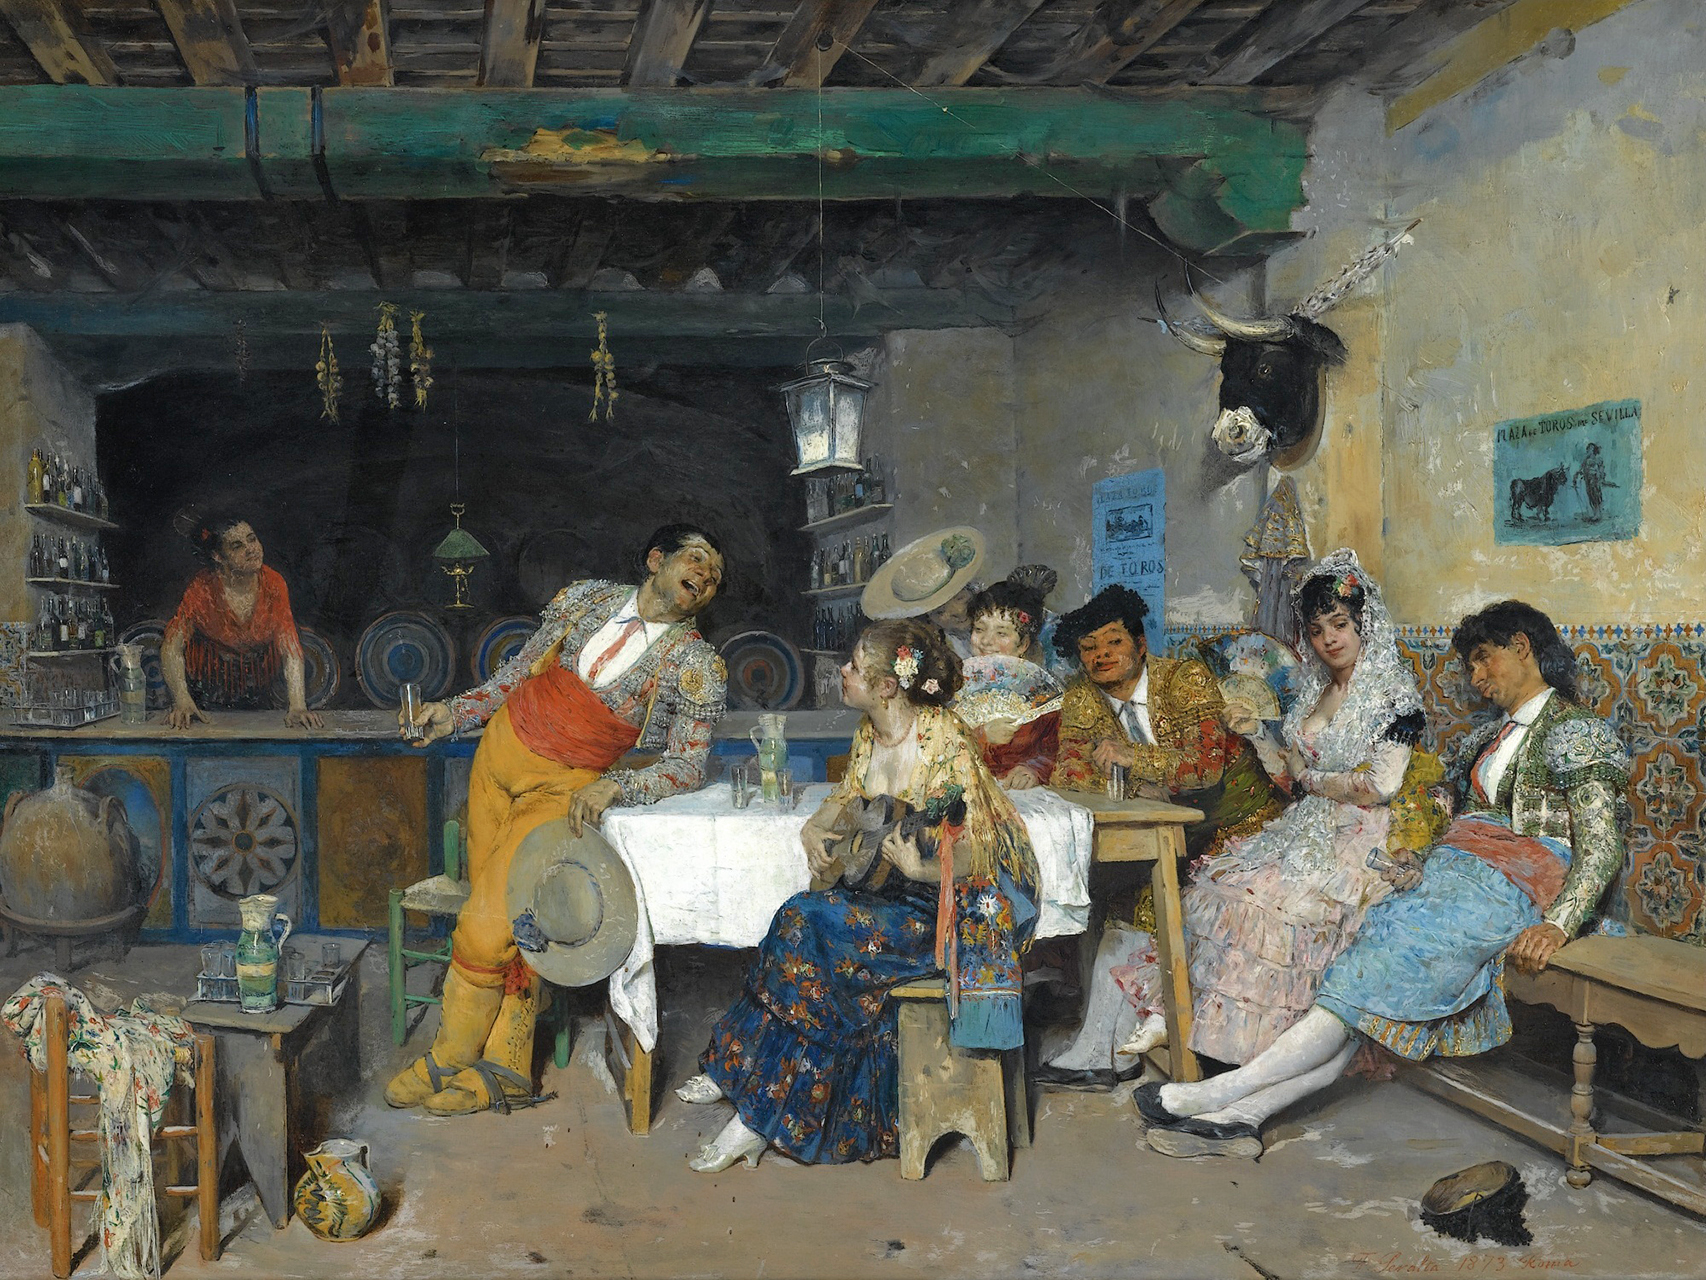 Francisco Peralta del_Campo: Diversión en la taberna (1873)